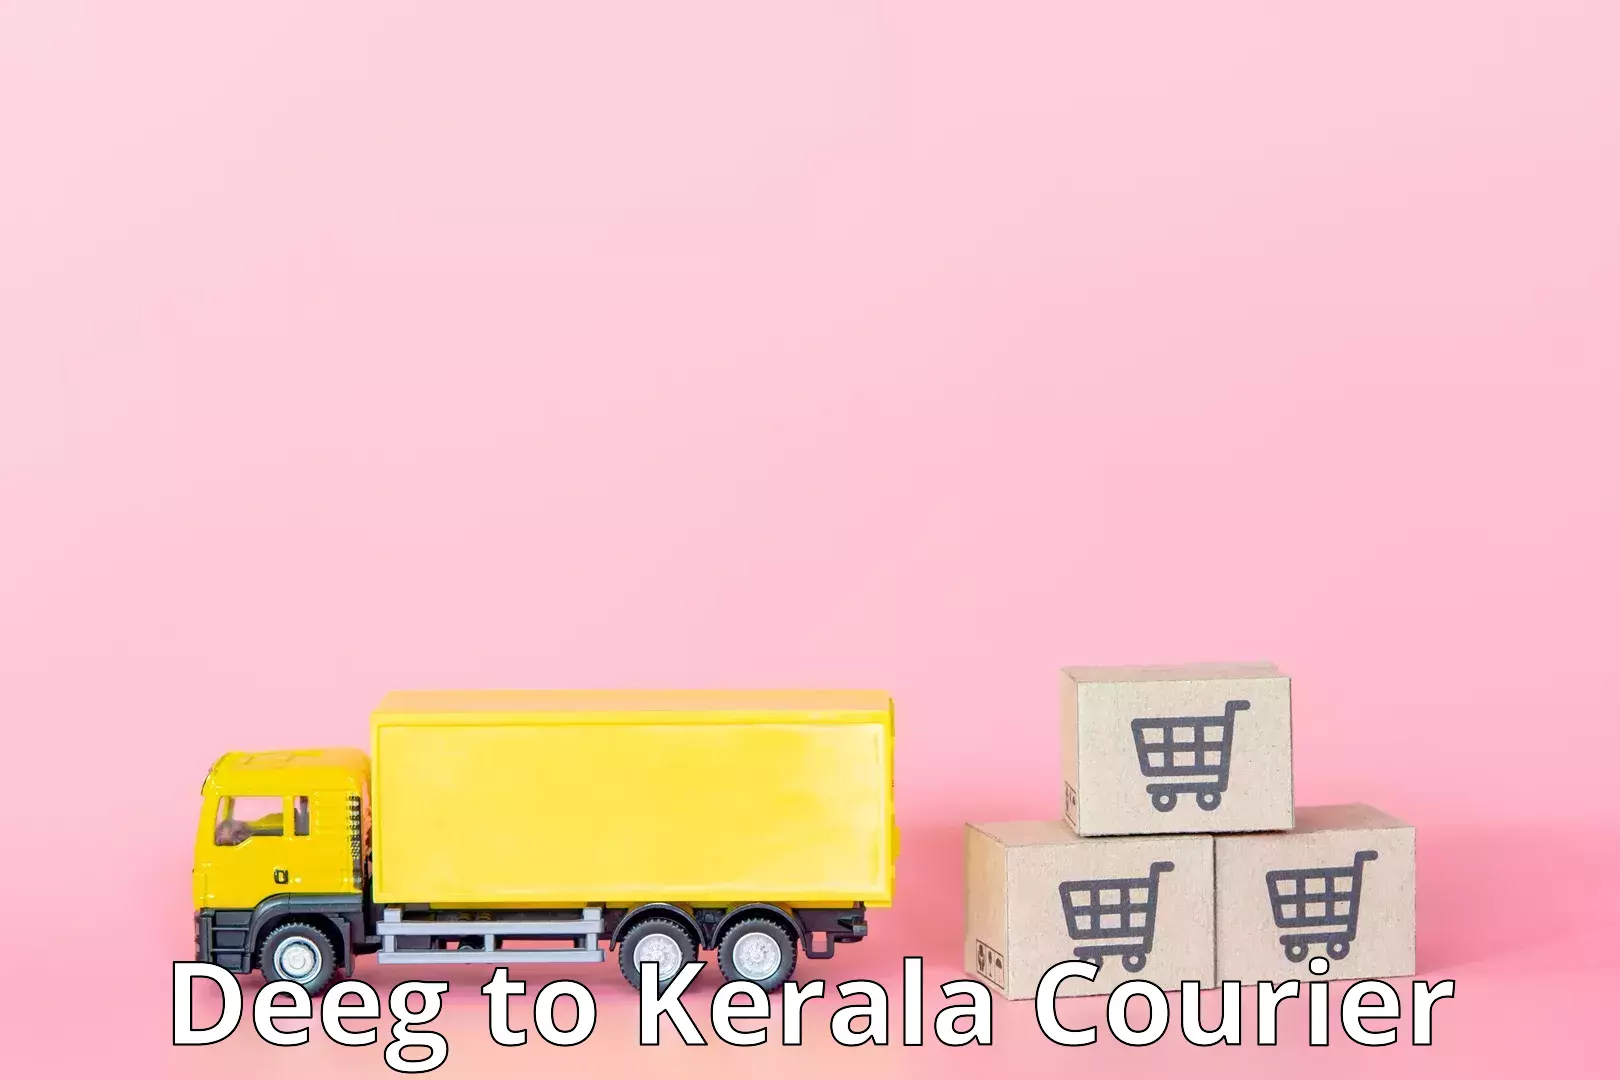 Efficient parcel tracking Deeg to Kerala